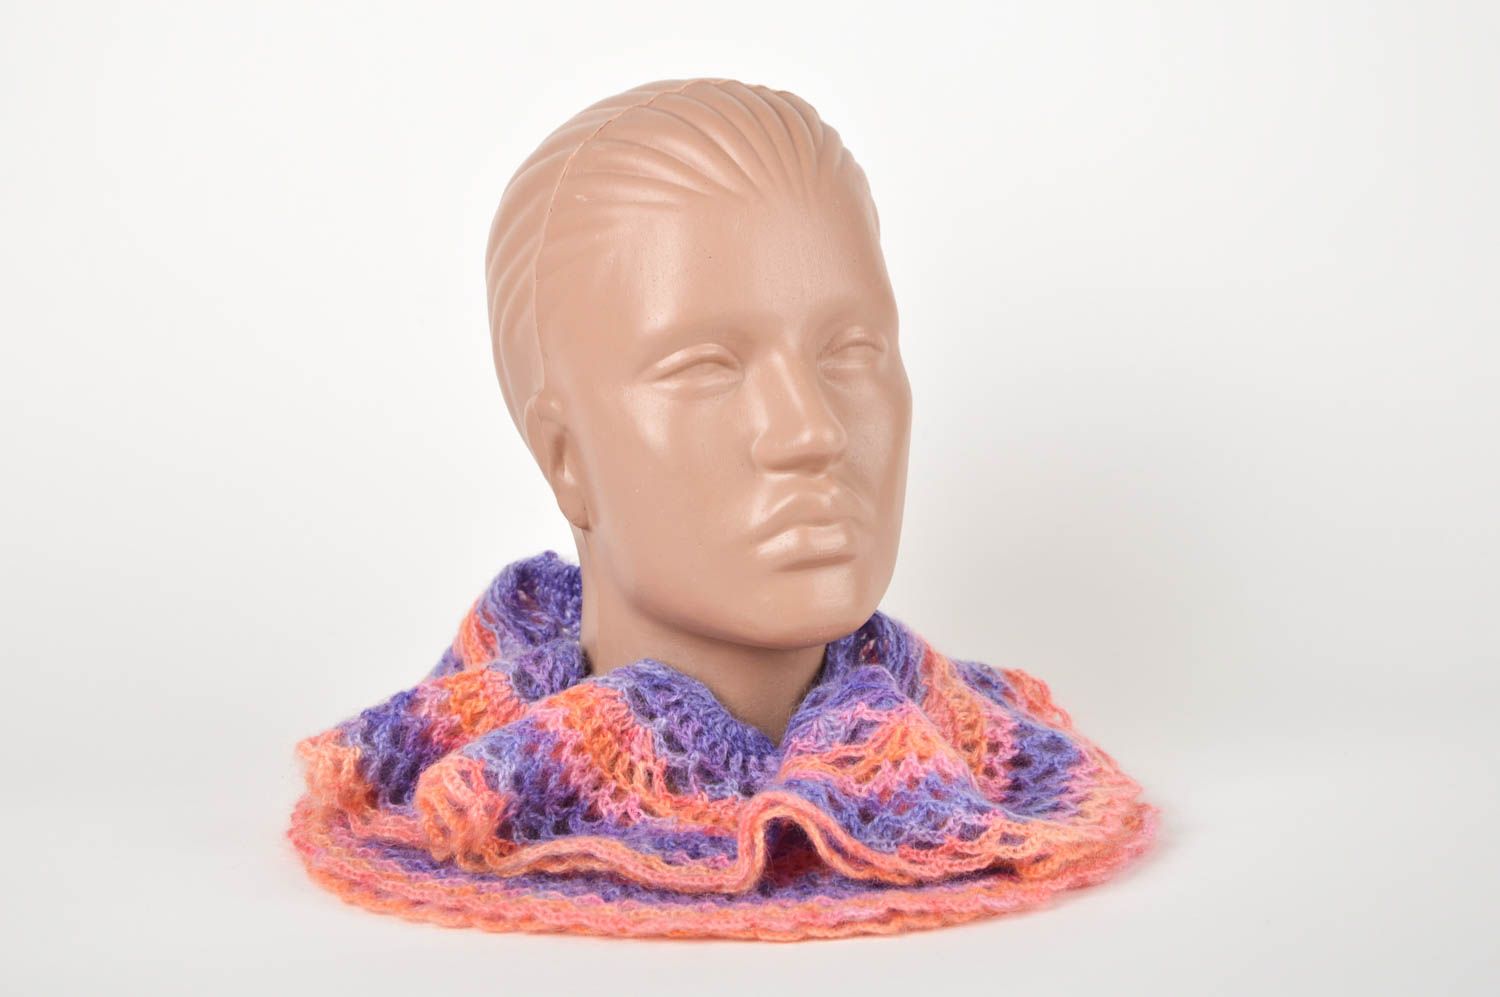 Beautiful handmade crochet scarf winter outfit handmade accessories for girls photo 1